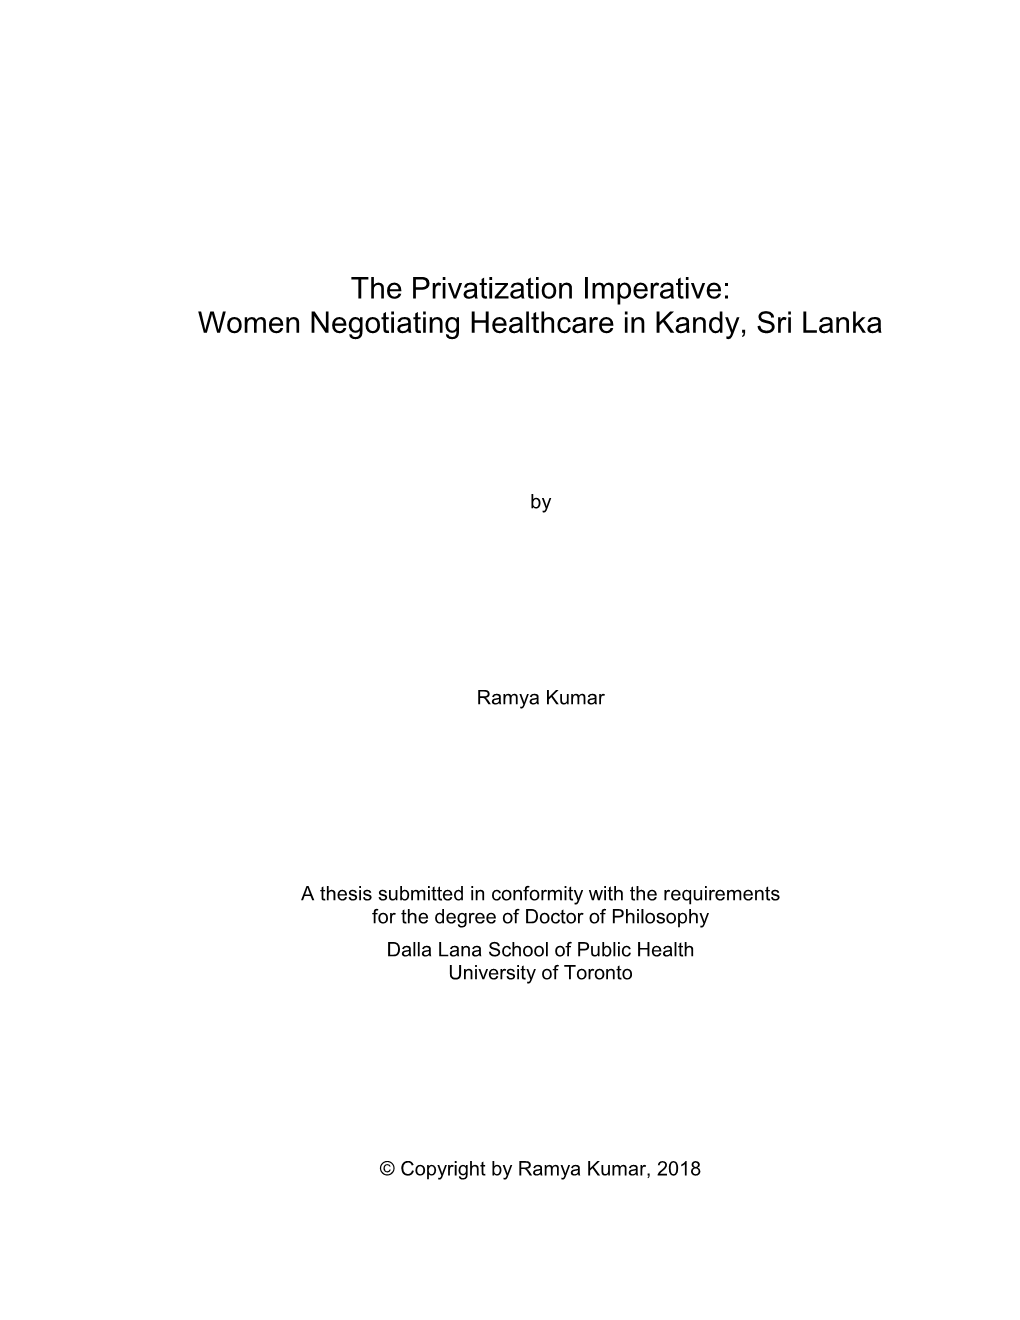 Women Negotiating Healthcare in Kandy, Sri Lanka